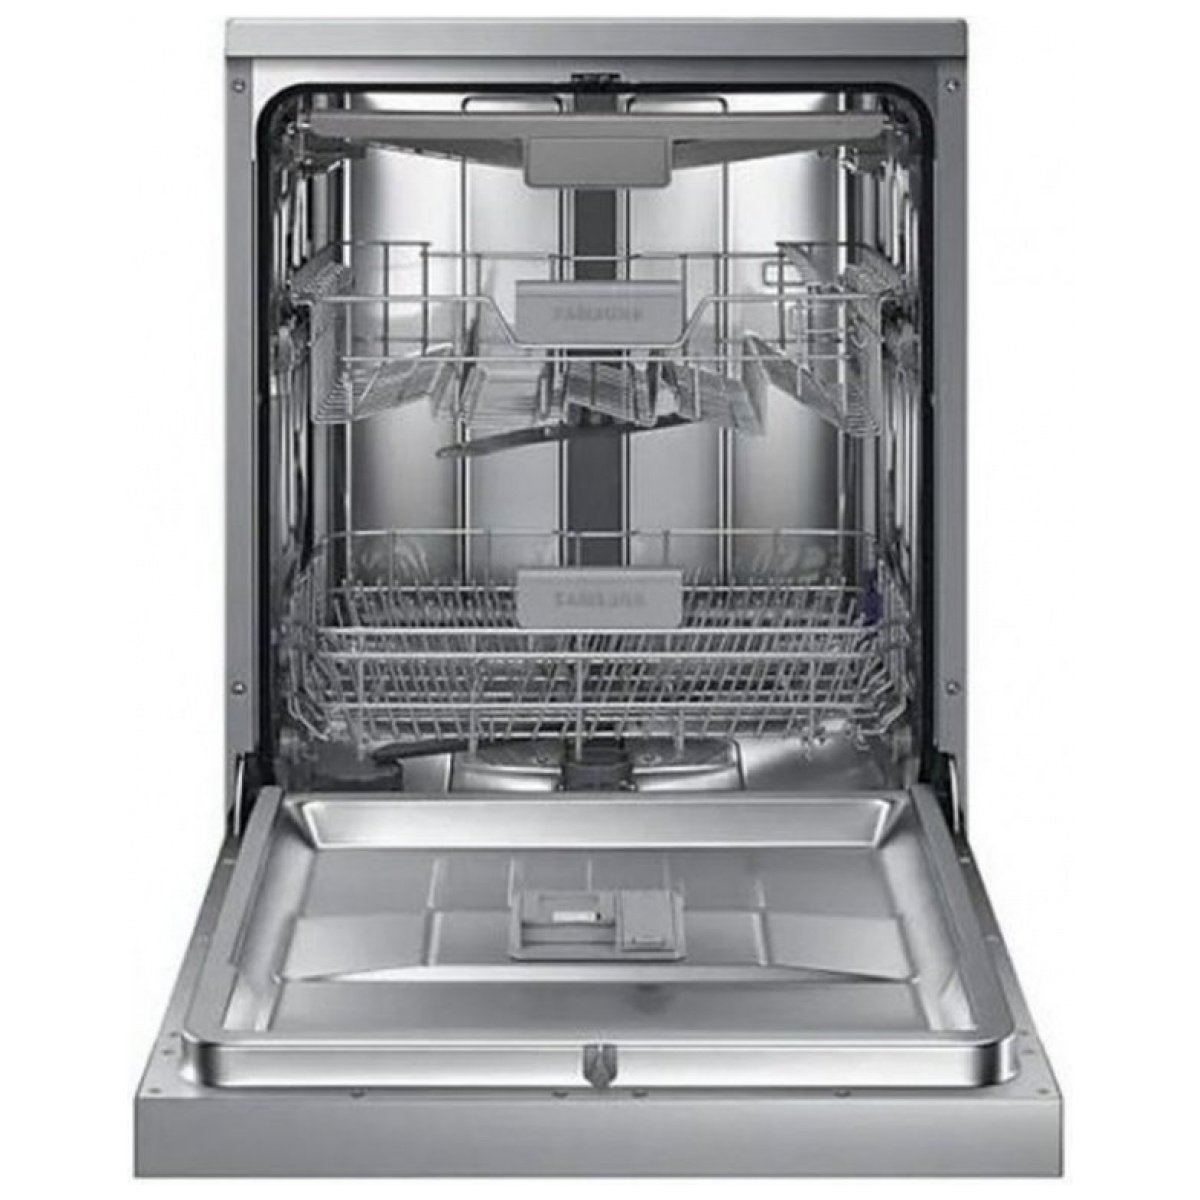 Samsung Dish Washer 14 Sets 7 Programs - Silver